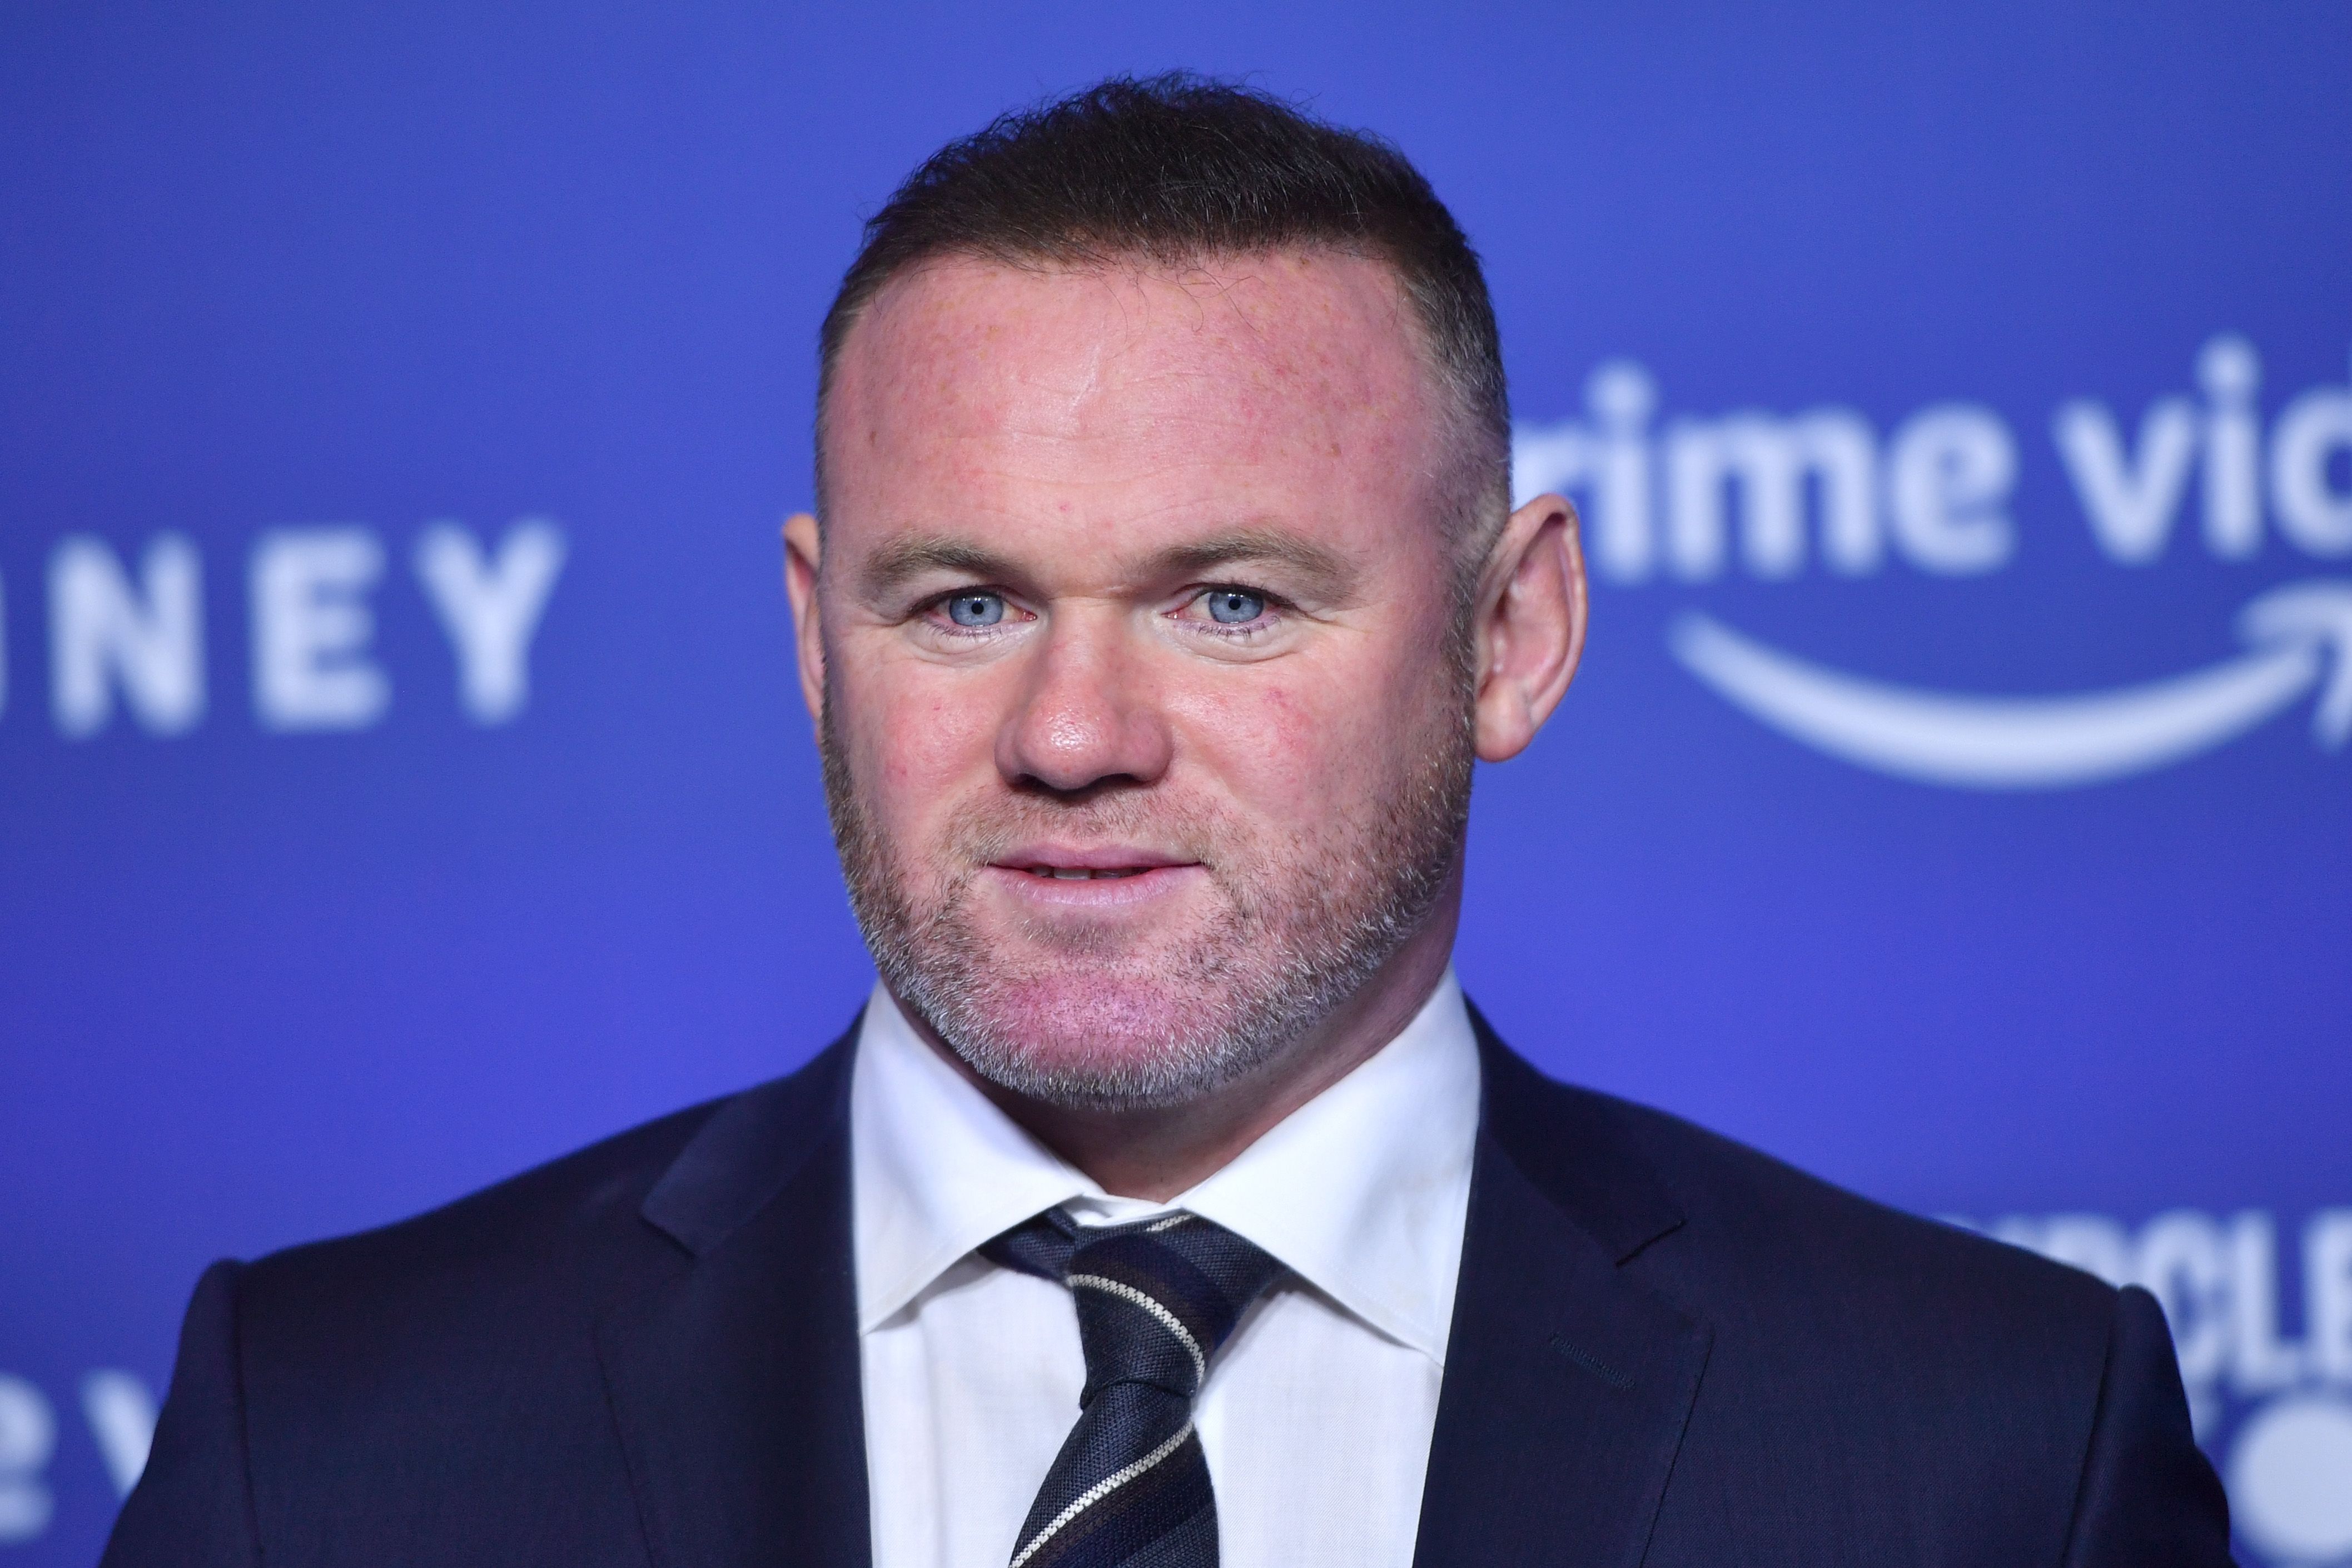 Wayne Rooney at a recent event